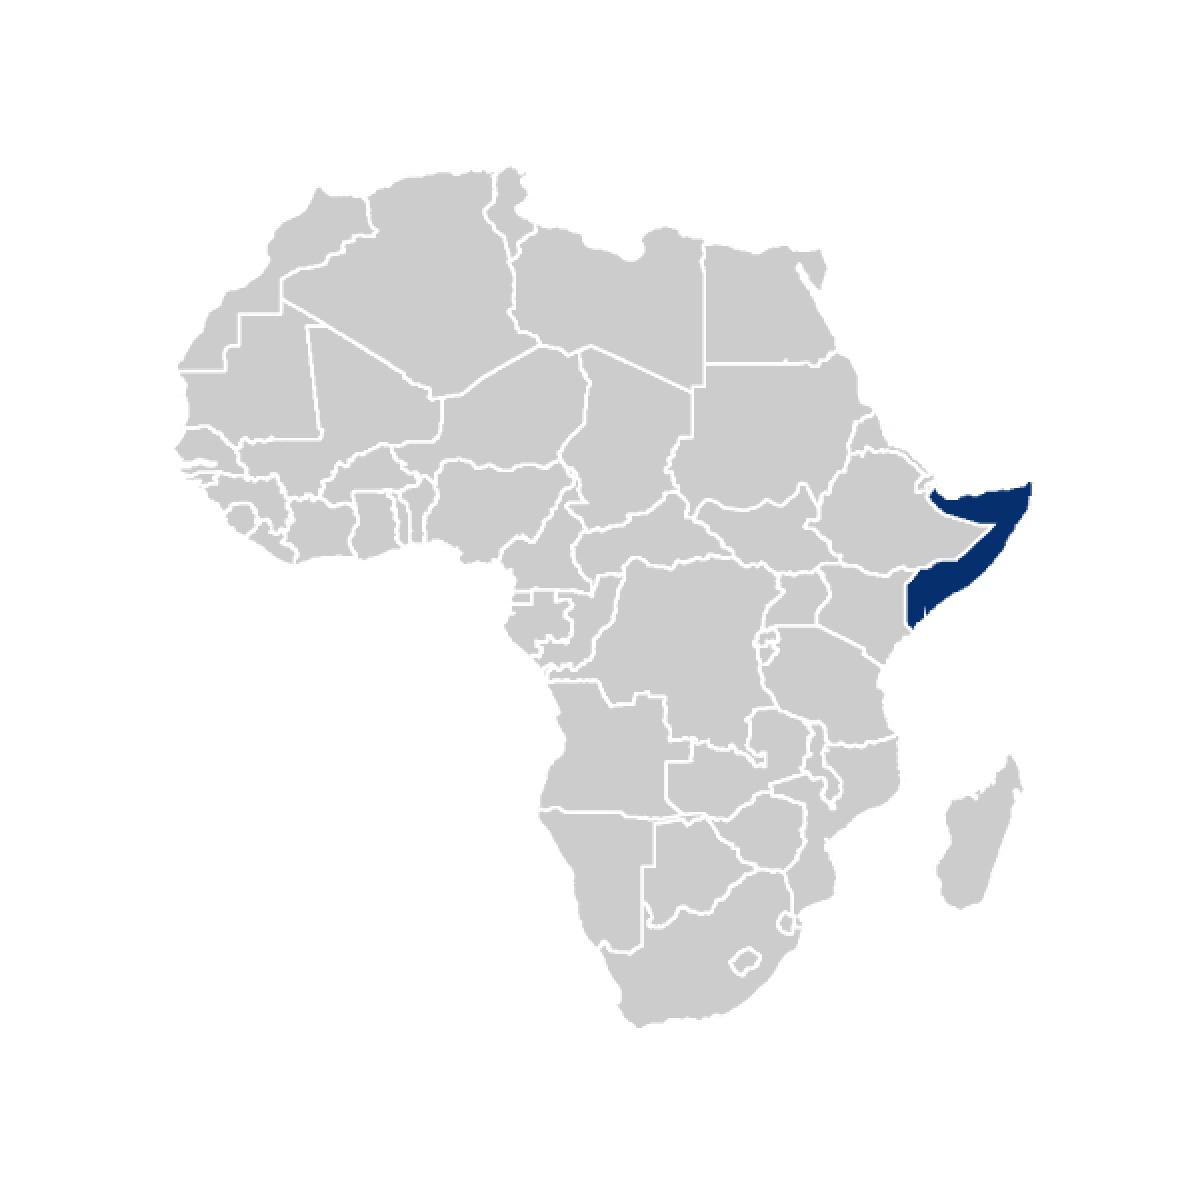 Somalia highlighted on Africa map